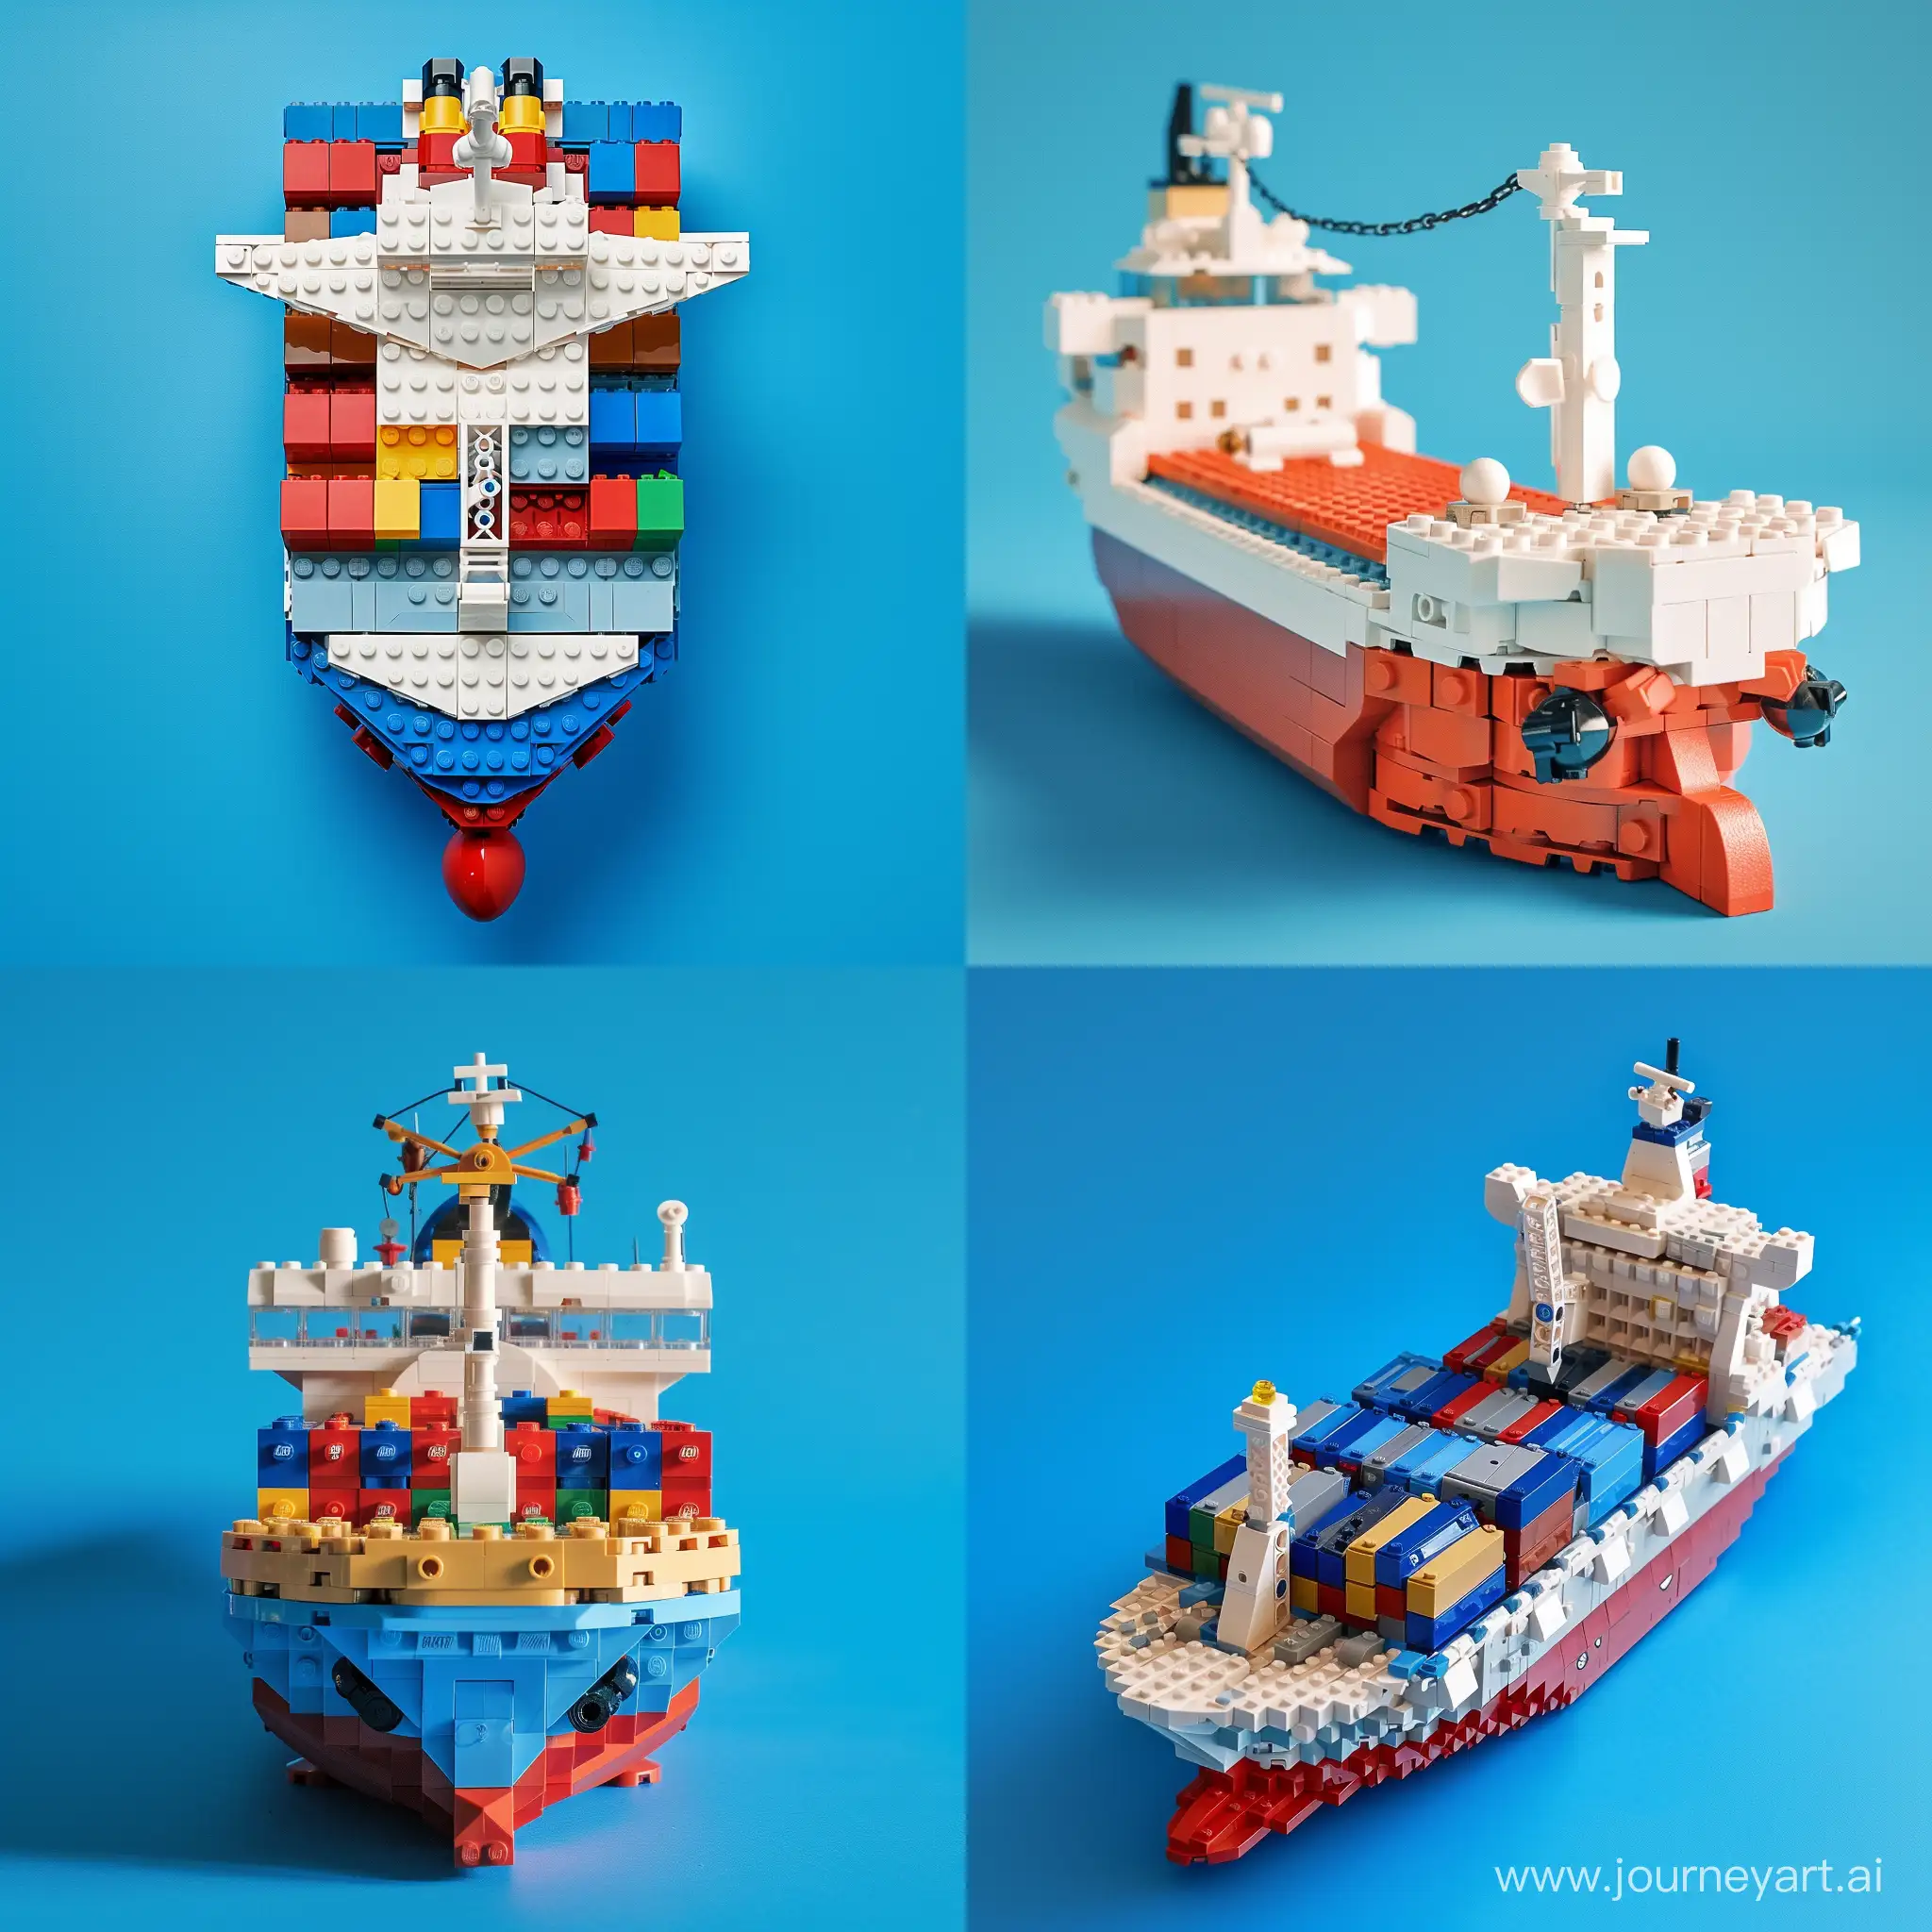 Colorful-Lego-Cargo-Ship-Sailing-on-a-Vibrant-Blue-Ocean